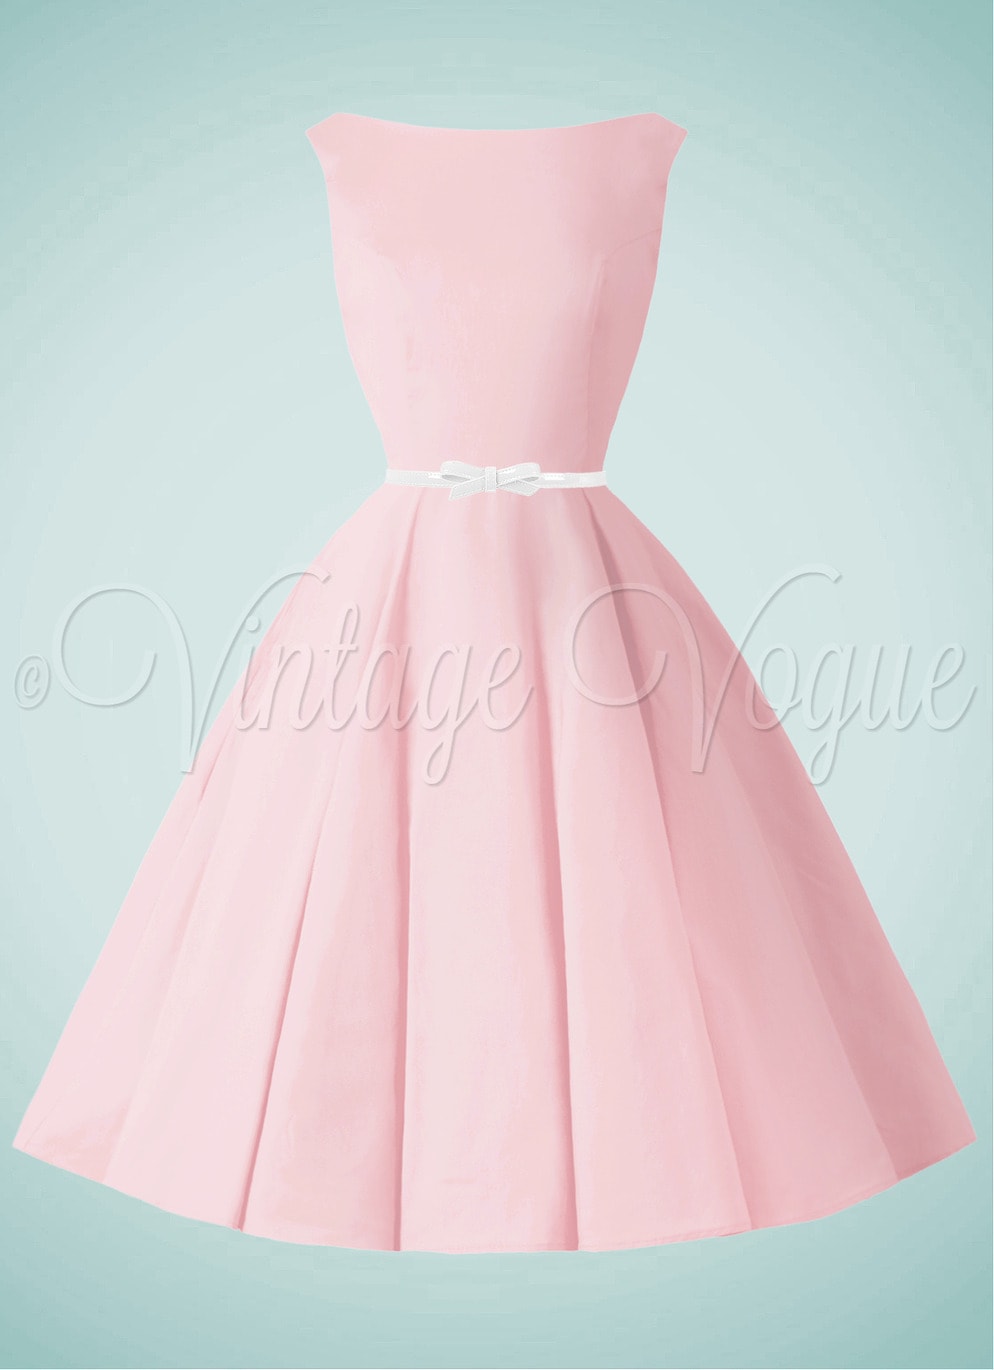 Forever Fifties 50's Retro Vintage Swing Kleid Audrey Plain Dress in Vintage Vogue 50er Jahre Petticoat Damenkleid Hochzeitsgast Sommerkleid Jive Lindy Hop